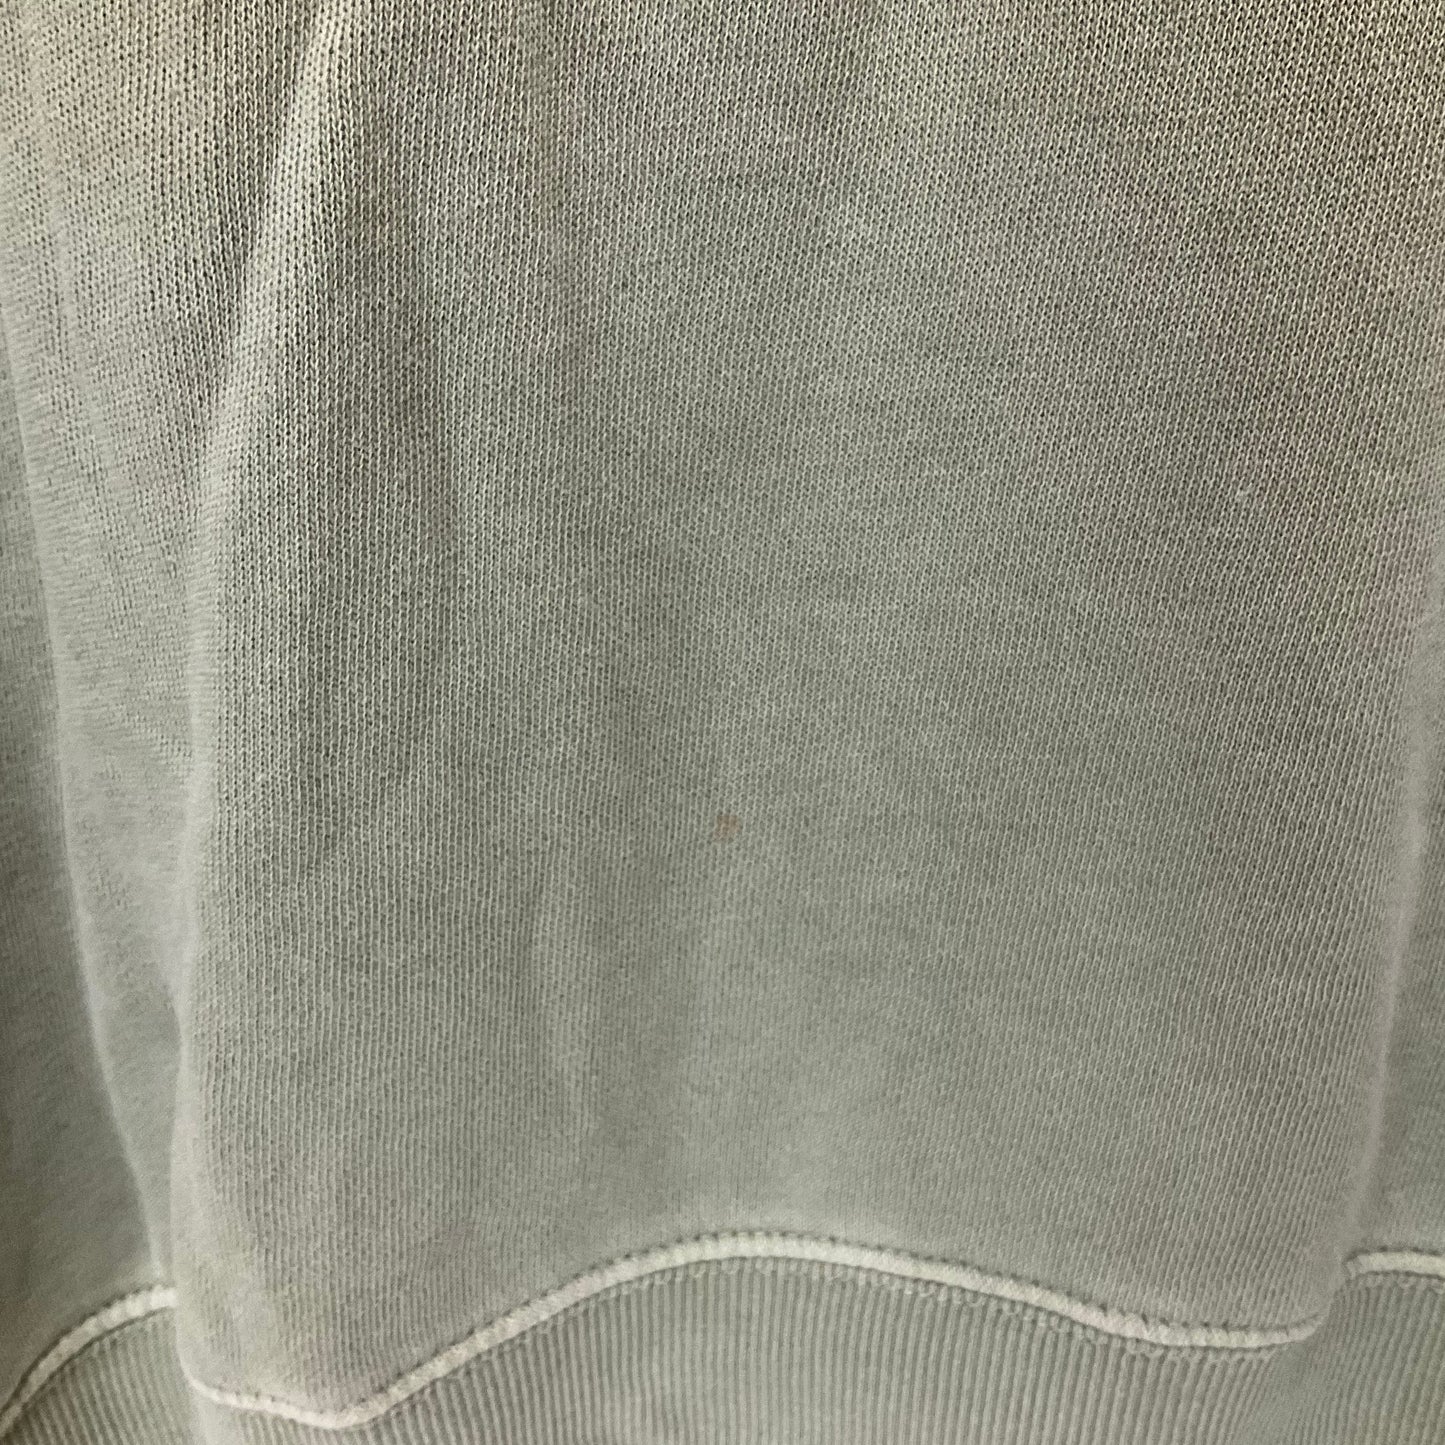 Sweatshirt Crewneck By Cotton On  Size: S